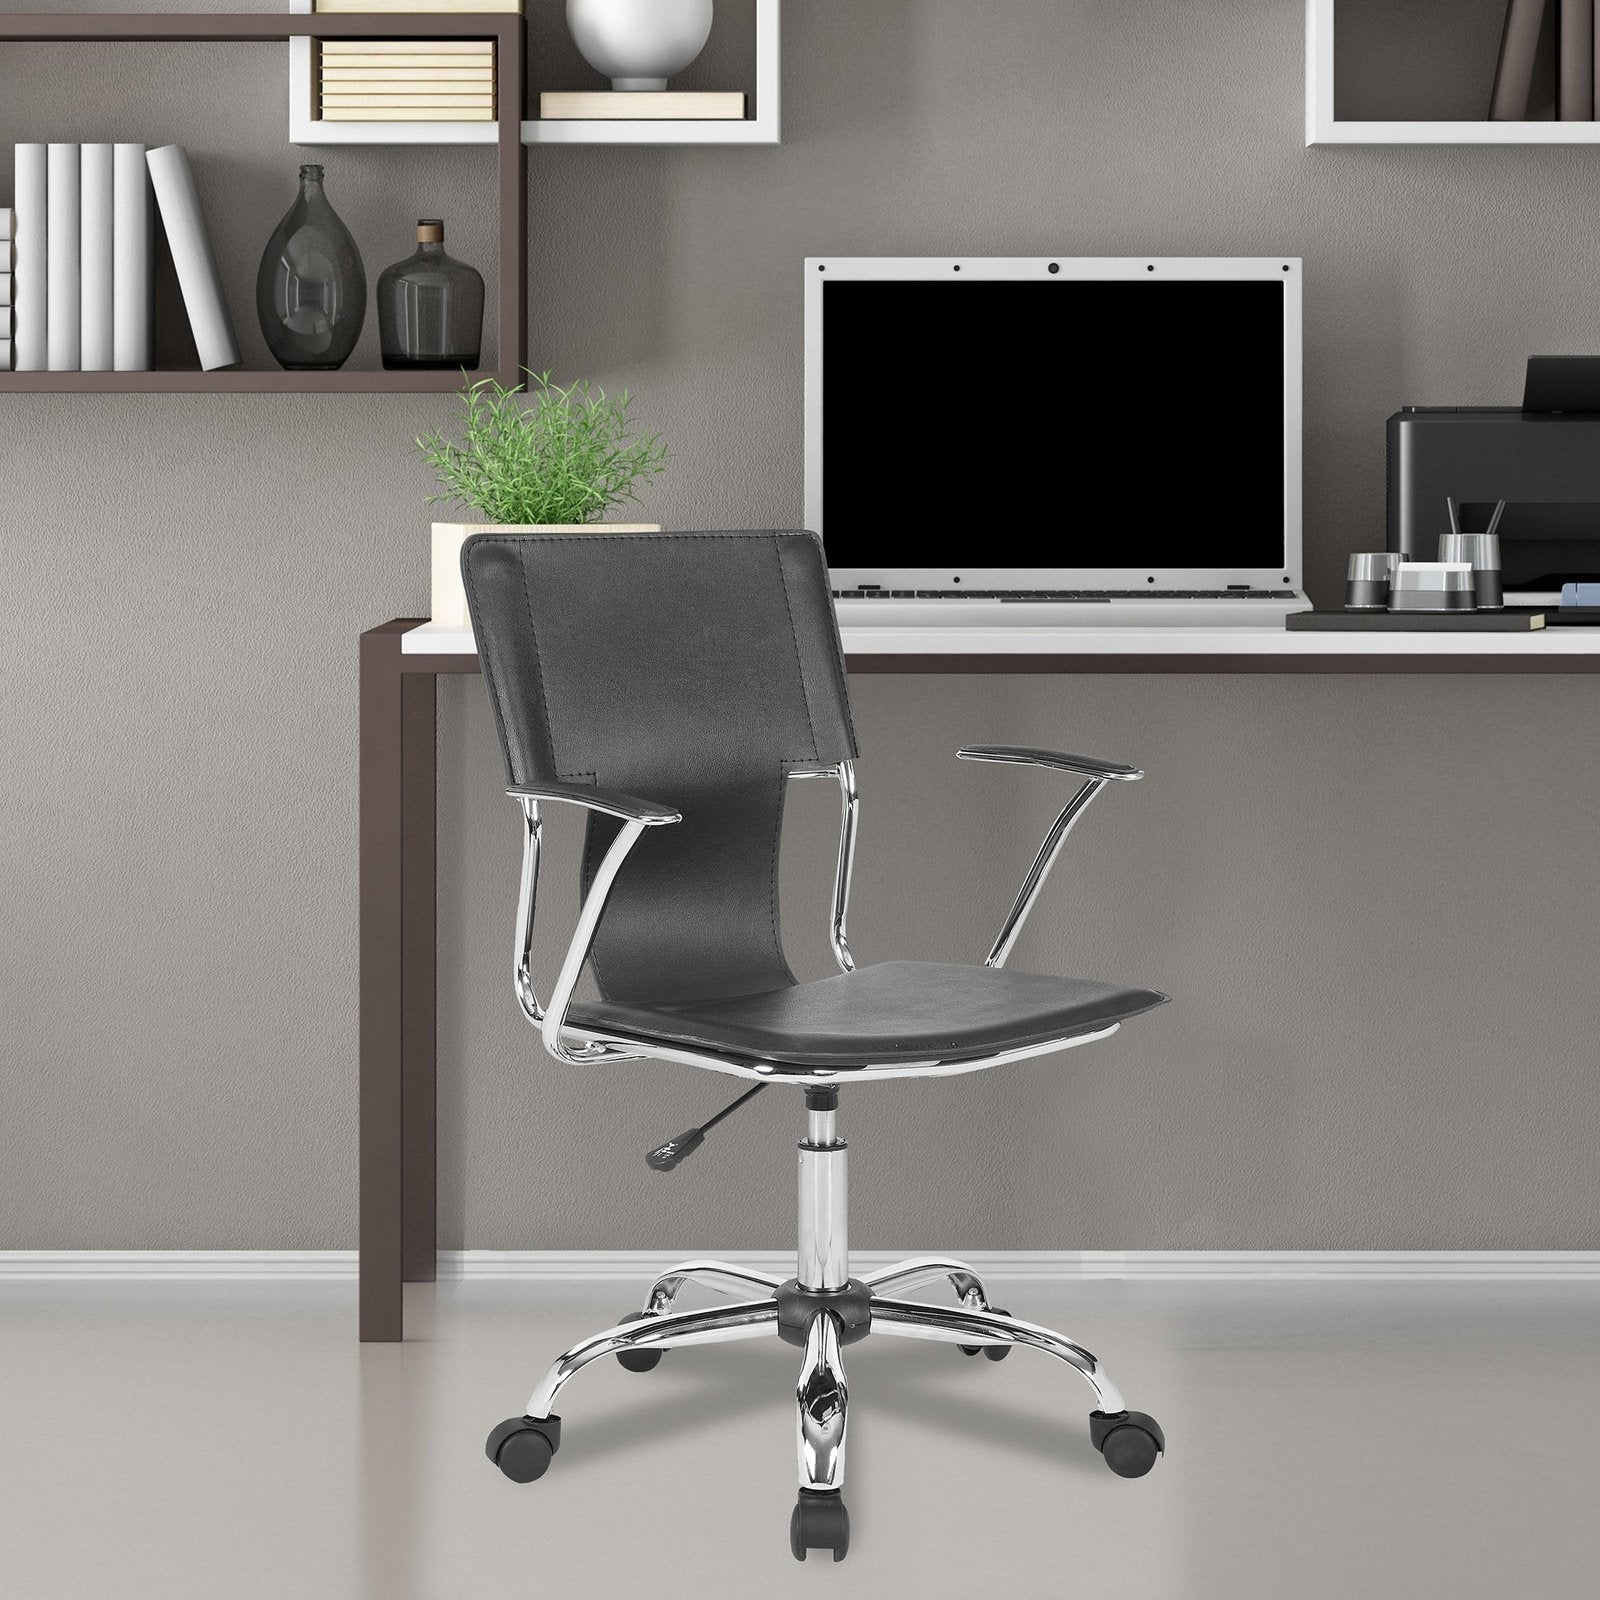 Designer Slimline Armchair with Tubular Chrome Frame - Office Products Online